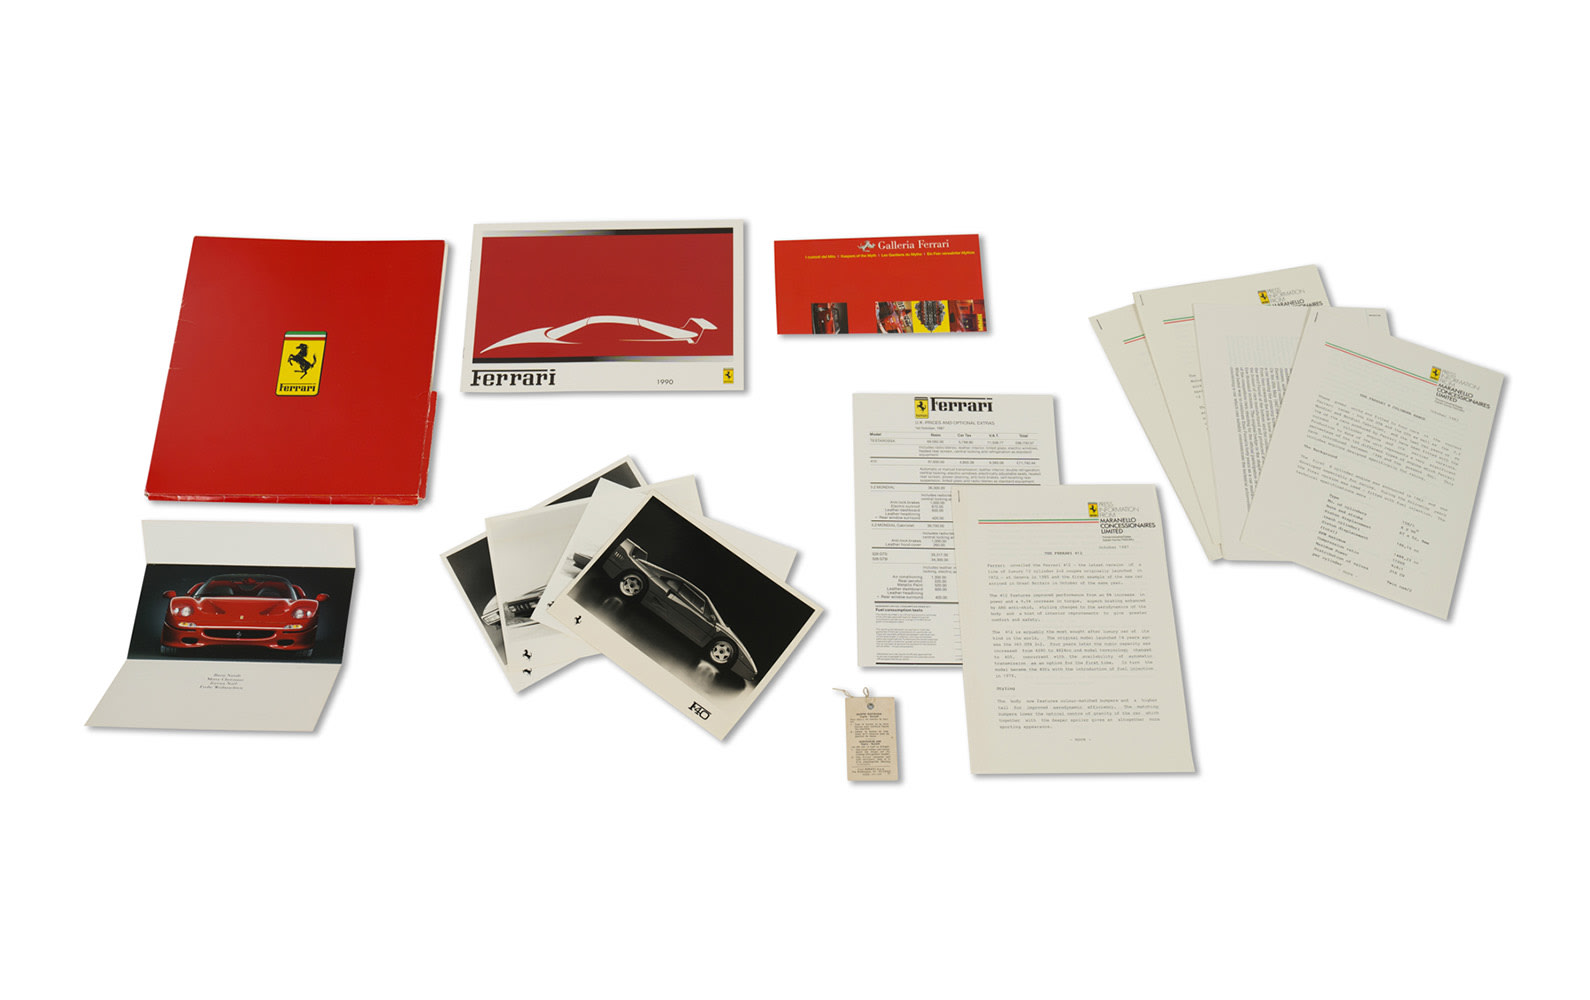 Ferrari Press Releases, Technical Documentation, Sales Brochure, F50 Christmas Card, and Veglia-Borletti Clock Tag